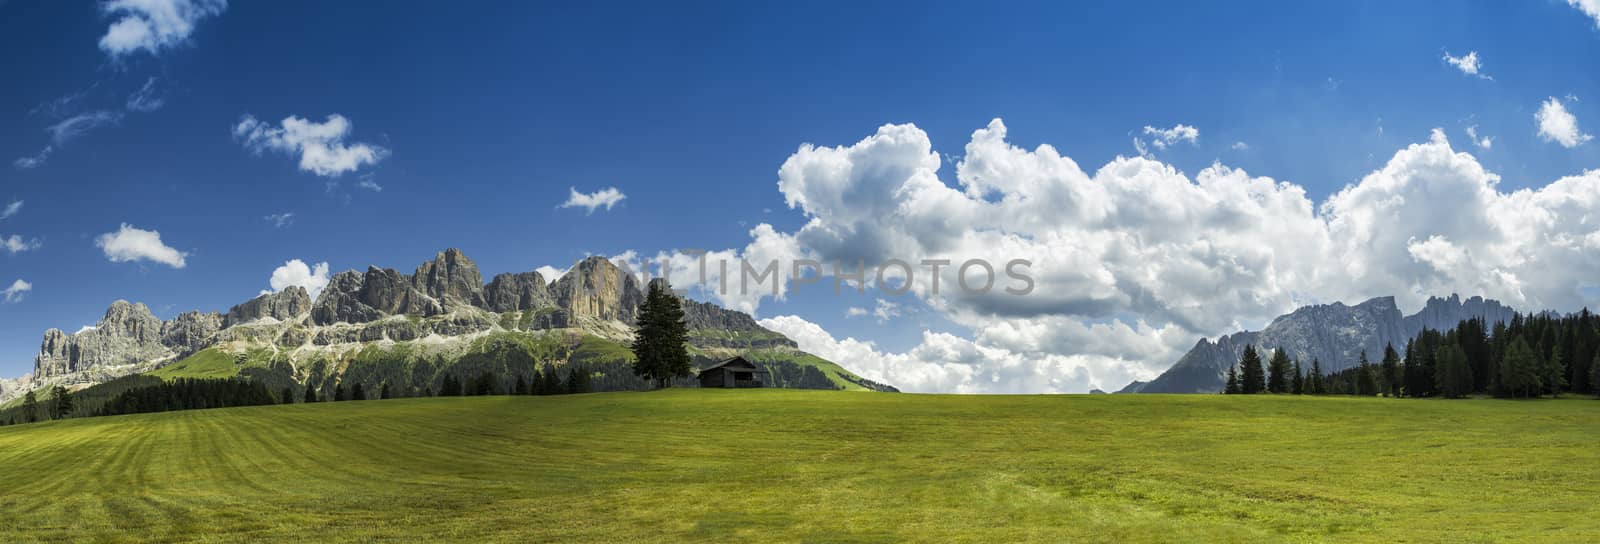 Dolomiti, Catinaccio and Latemar panorama from Colbleggio meadow